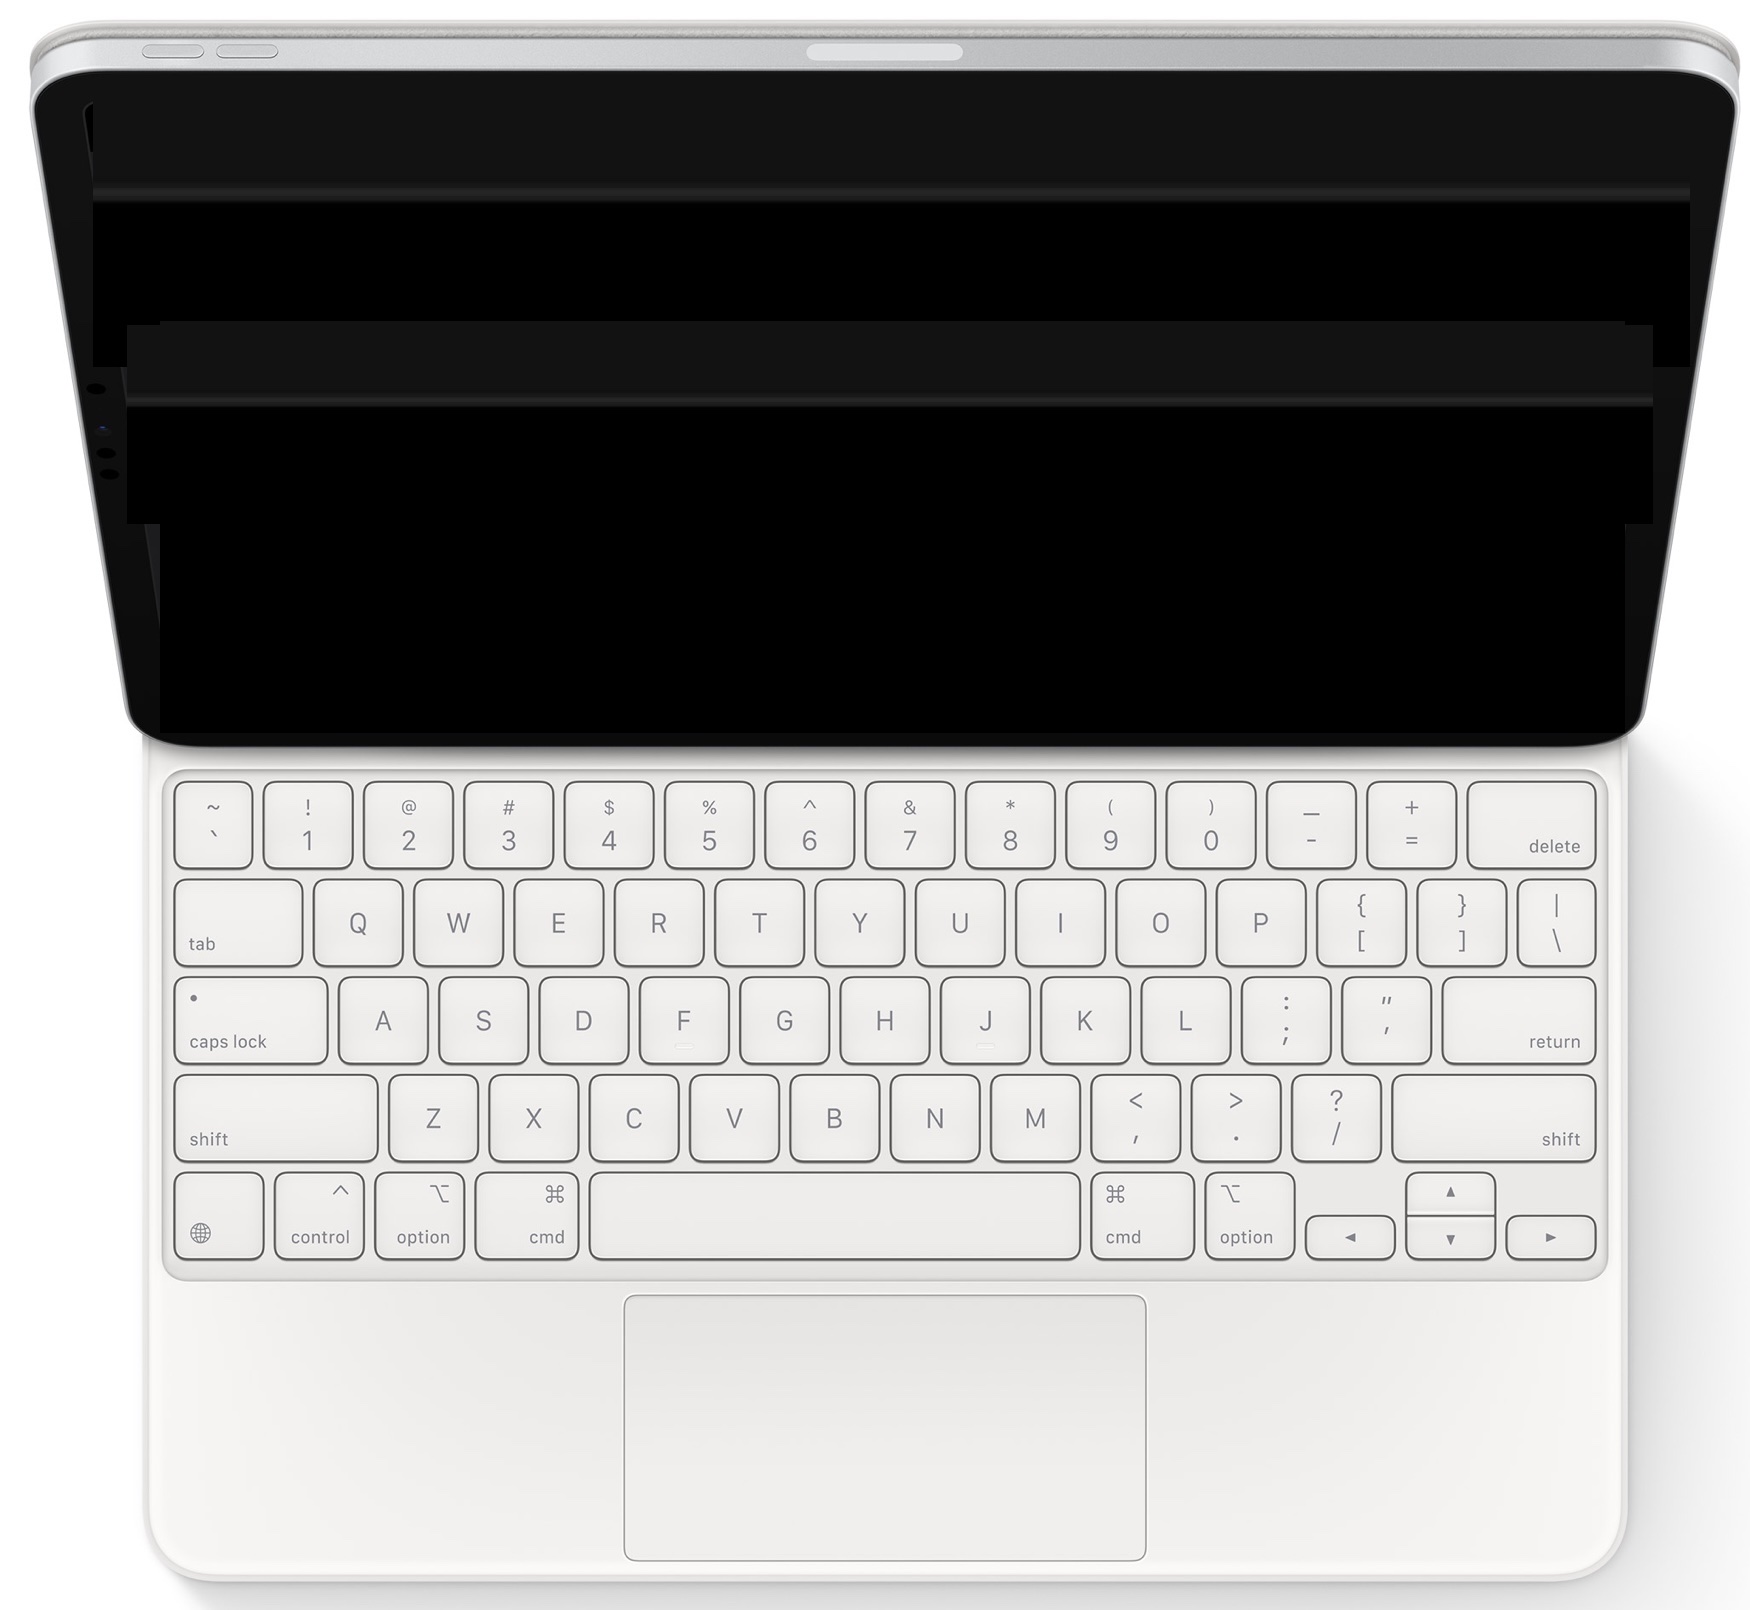 GOOJODOQ Magic Keyboard Case For iPad Pro 11 Pro 12 9 12.9 iPad